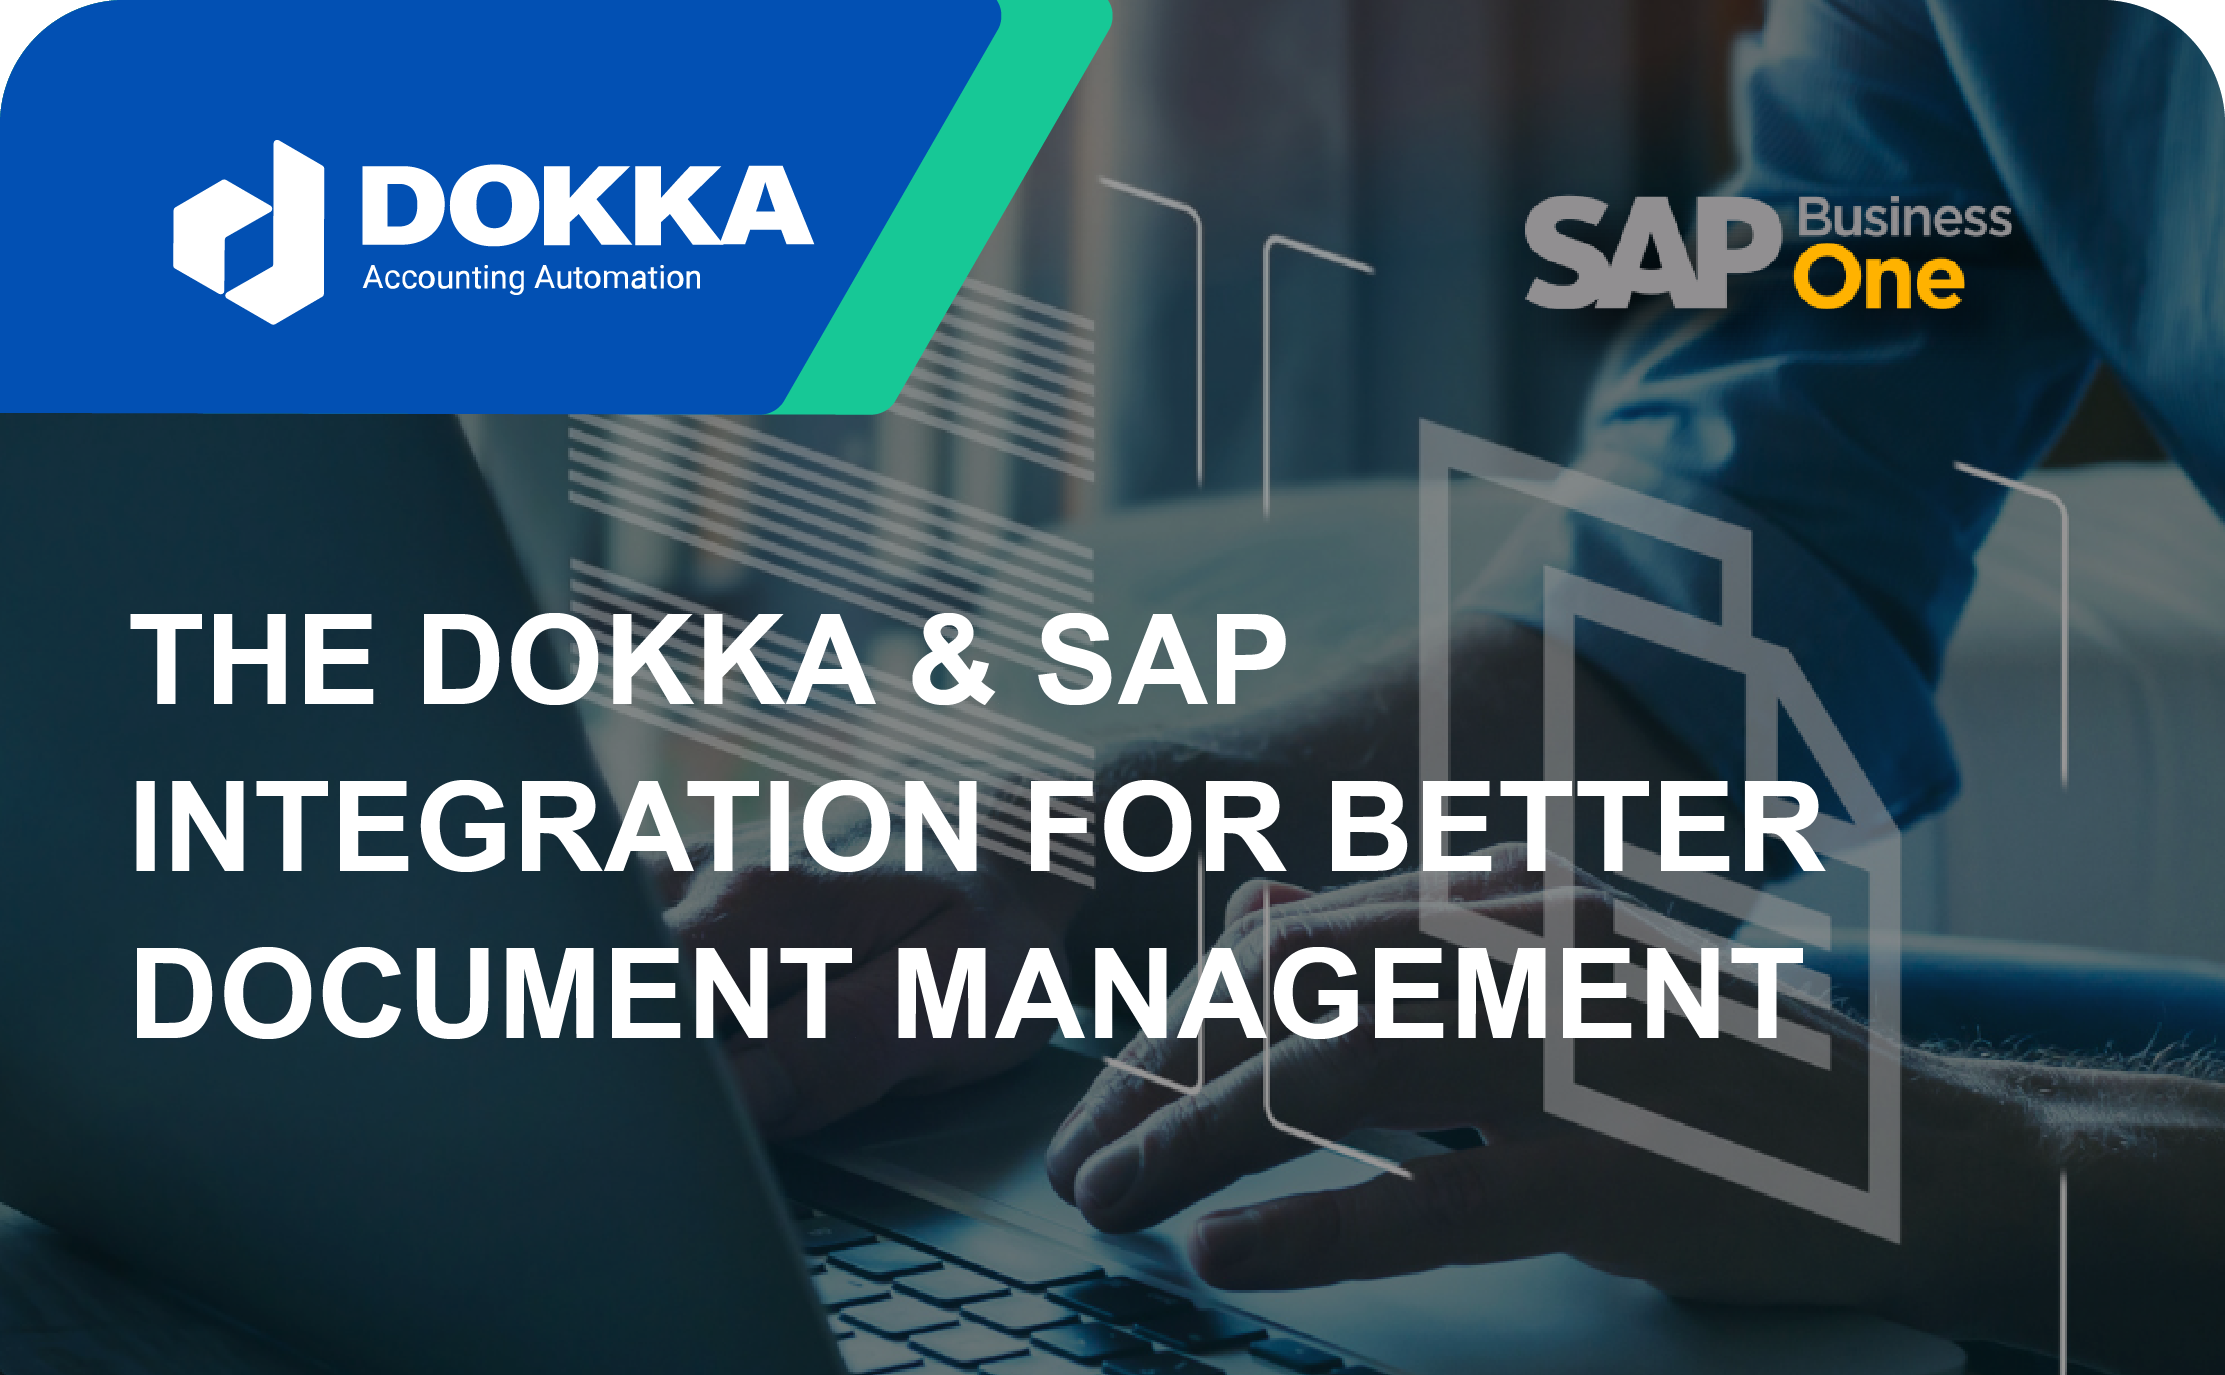 The DOKKA & SAP Integration for Better Document Management